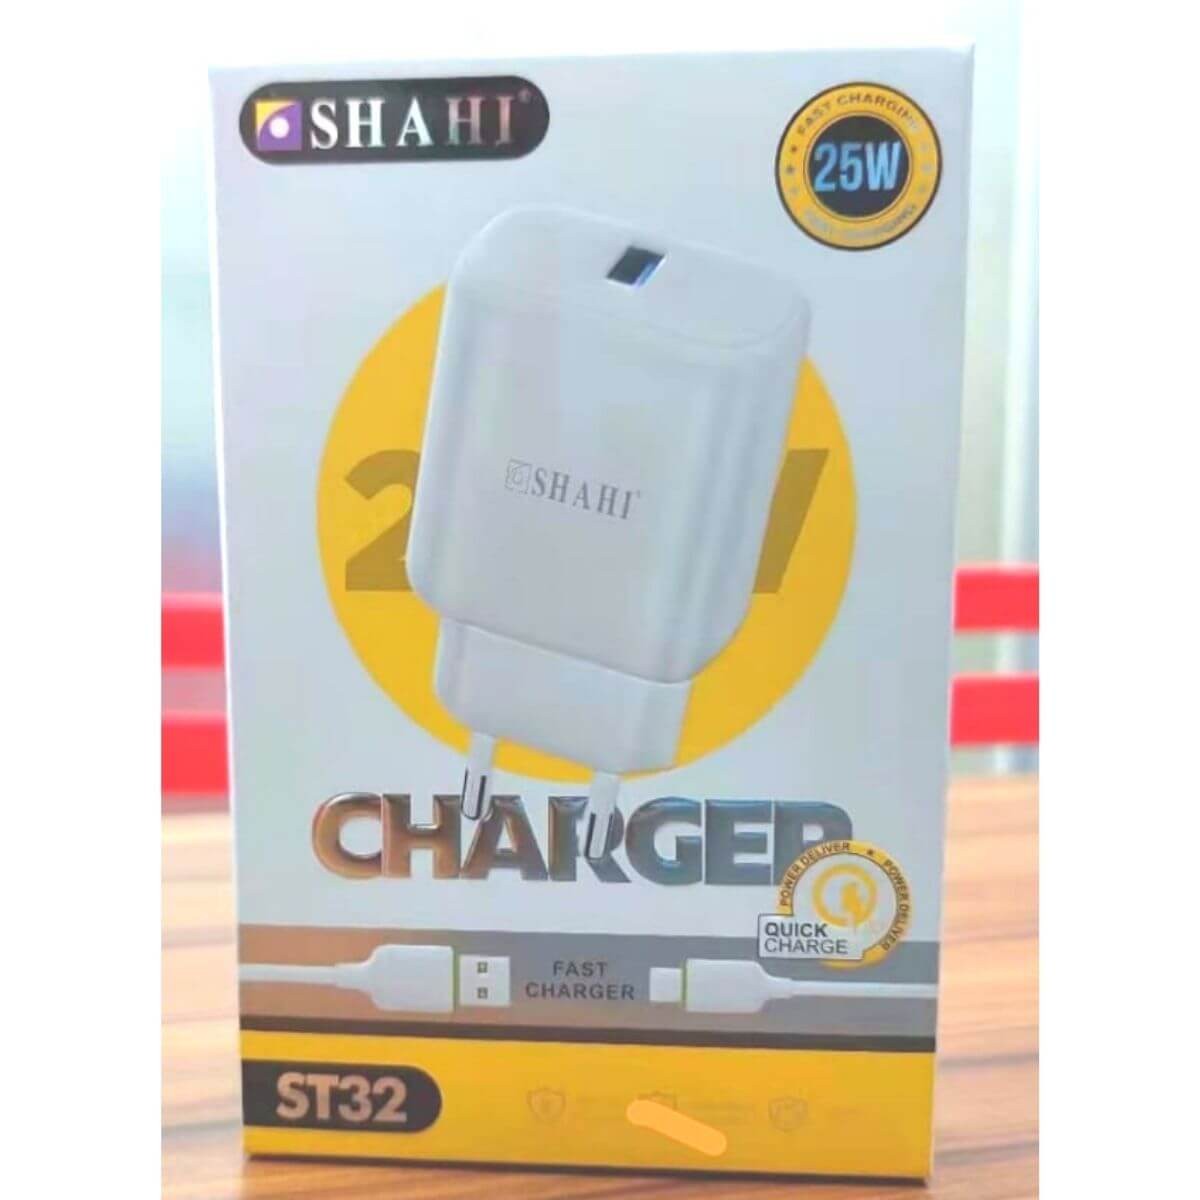 Shahi 25Watt ST32 Type-c Fast Quick Charger BD